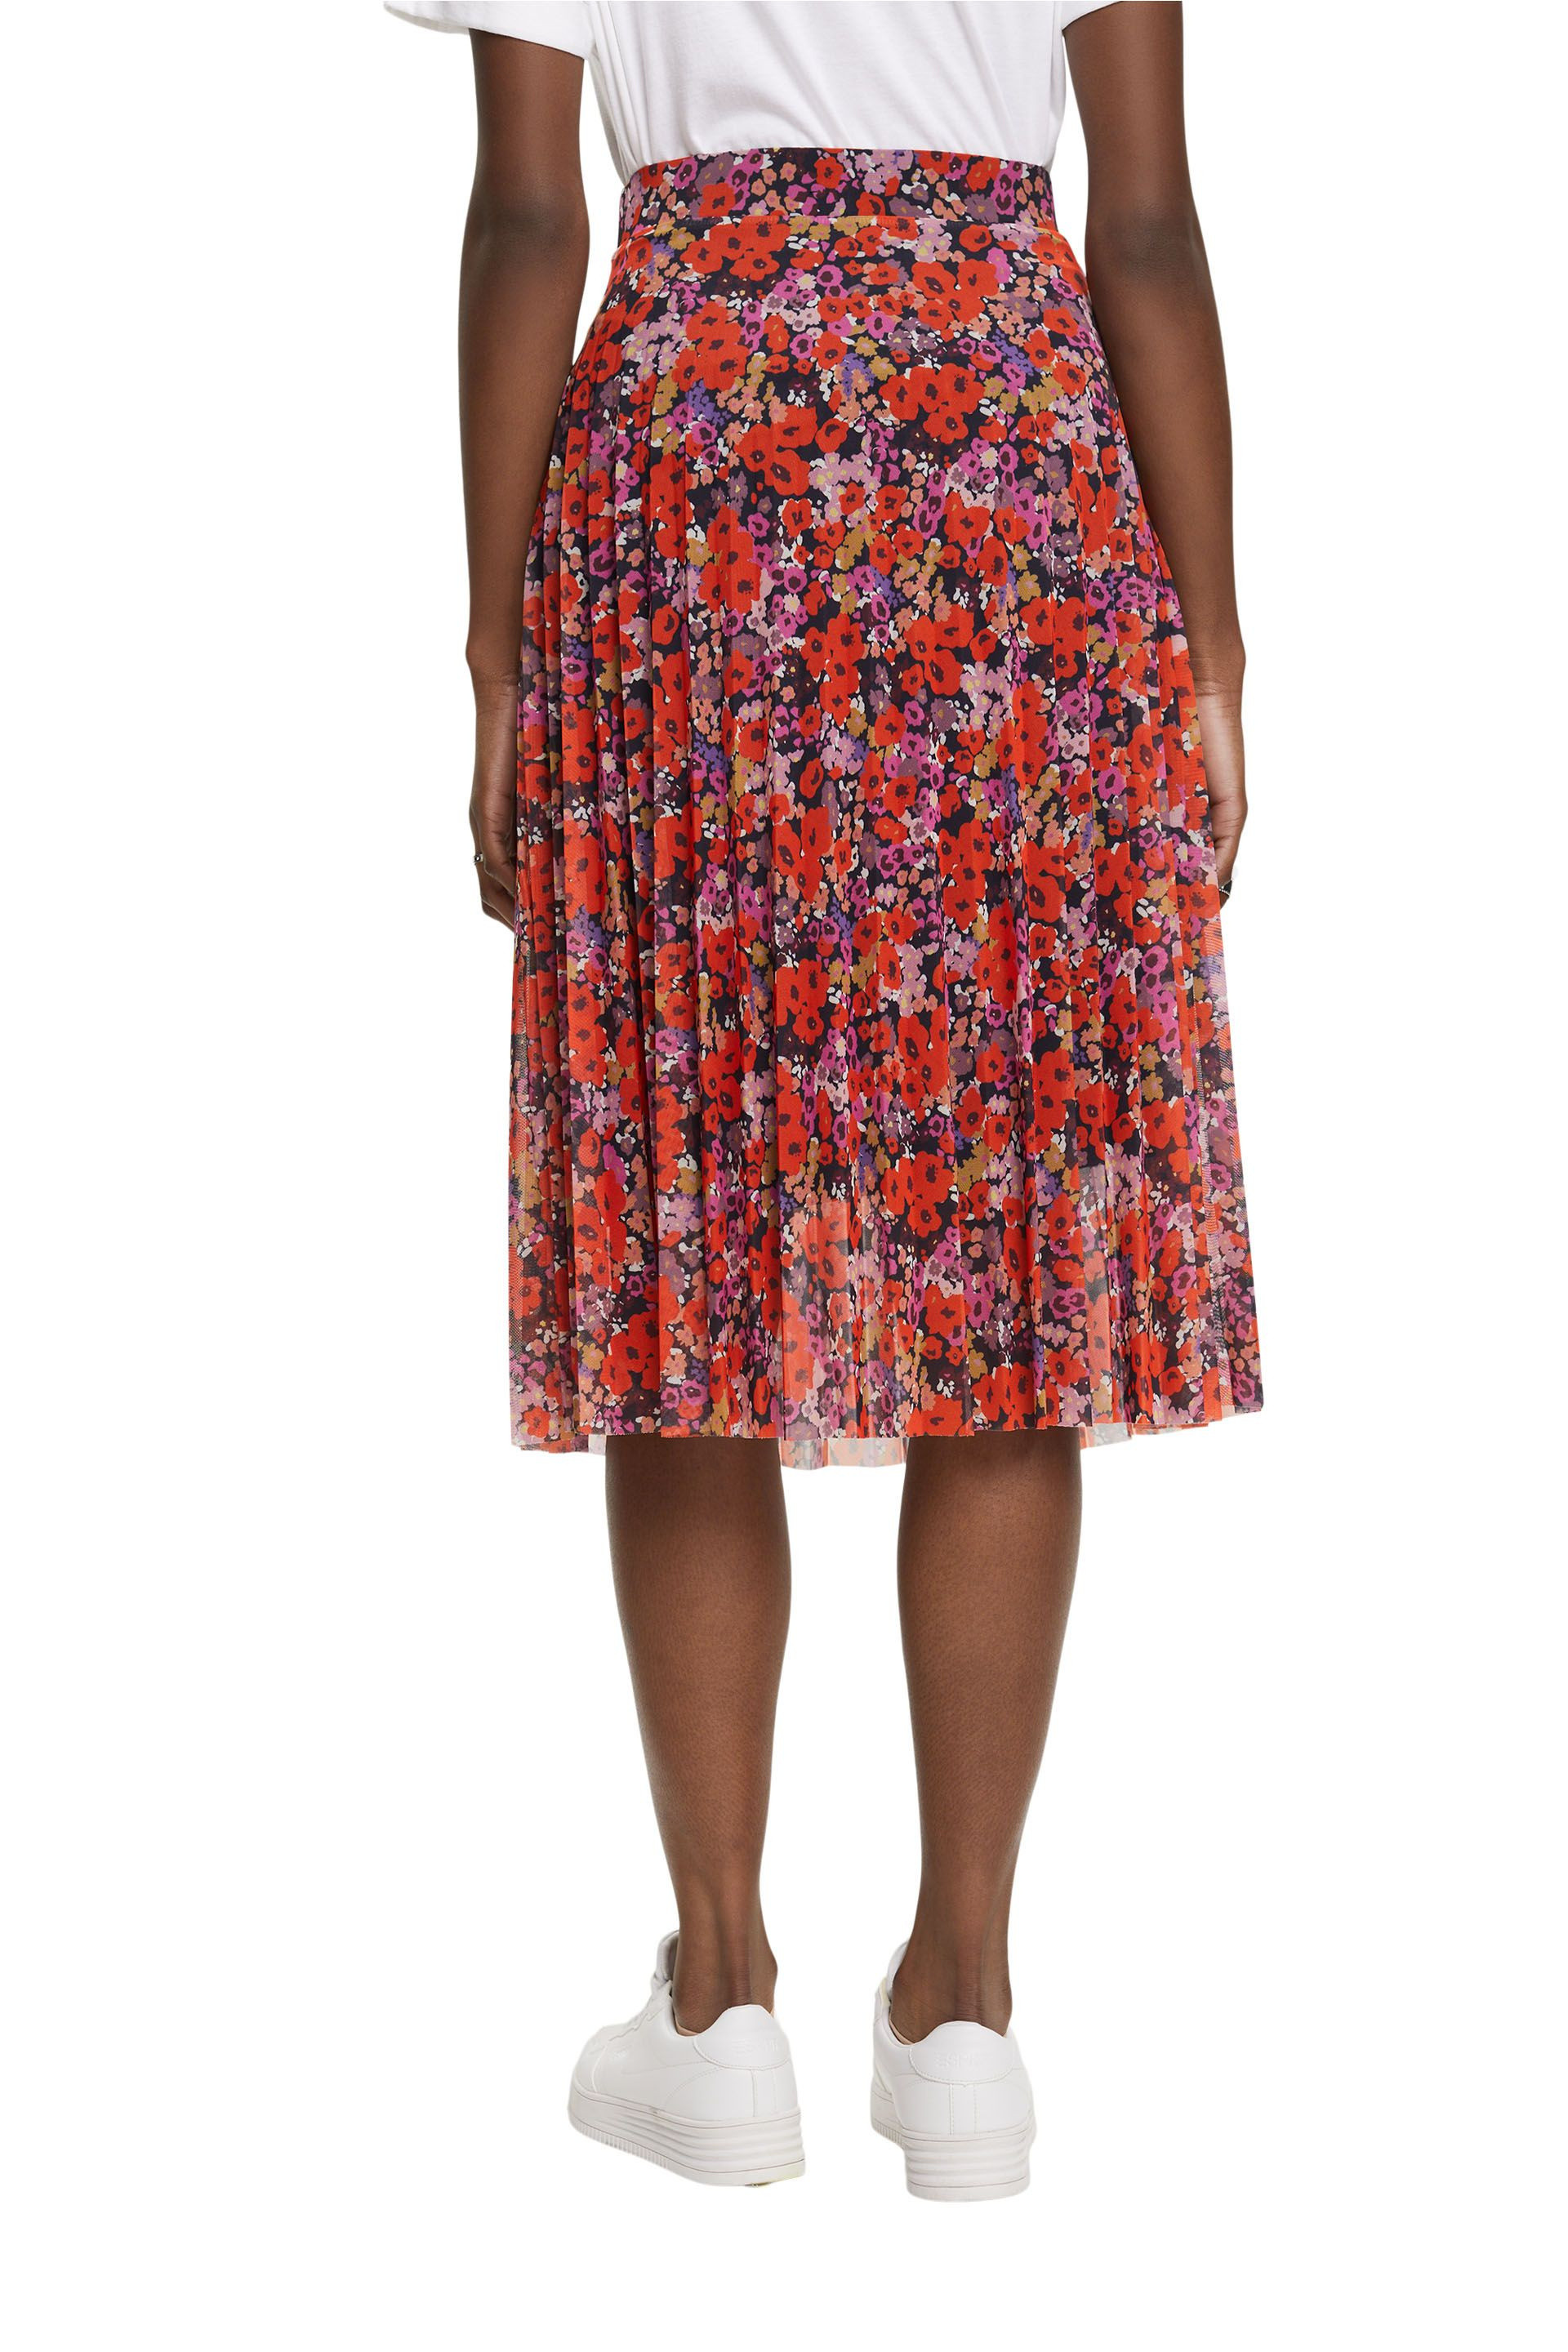 Esprit - Floral pleated skirt, Multicolor, large image number 3